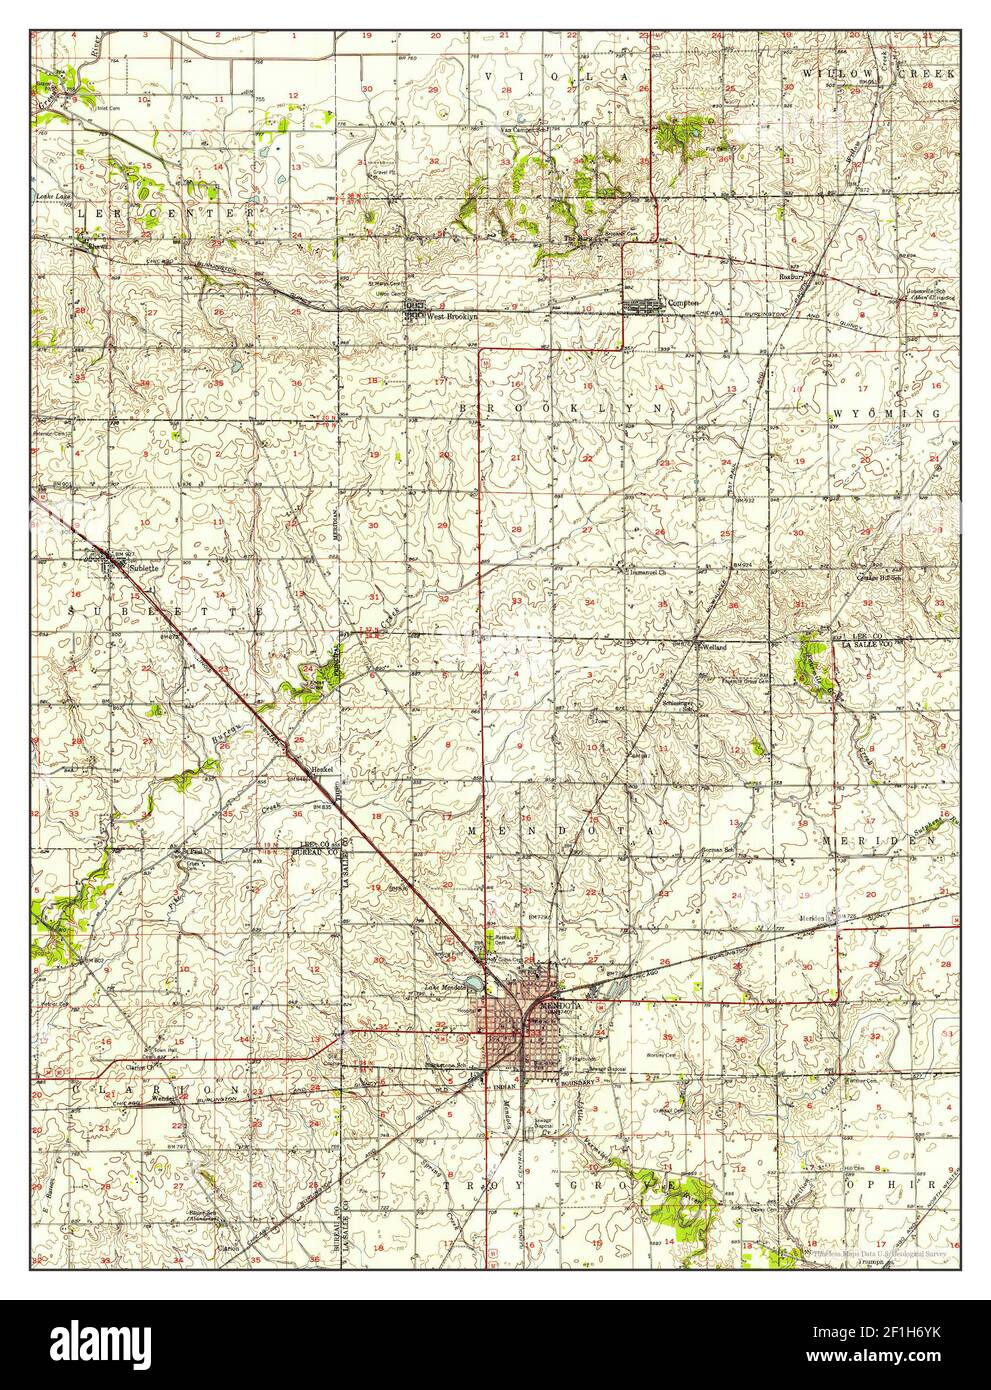 Mendota, Illinois, map 1952, 1:62500, United States of America by Timeless Maps, data U.S. Geological Survey Stock Photo